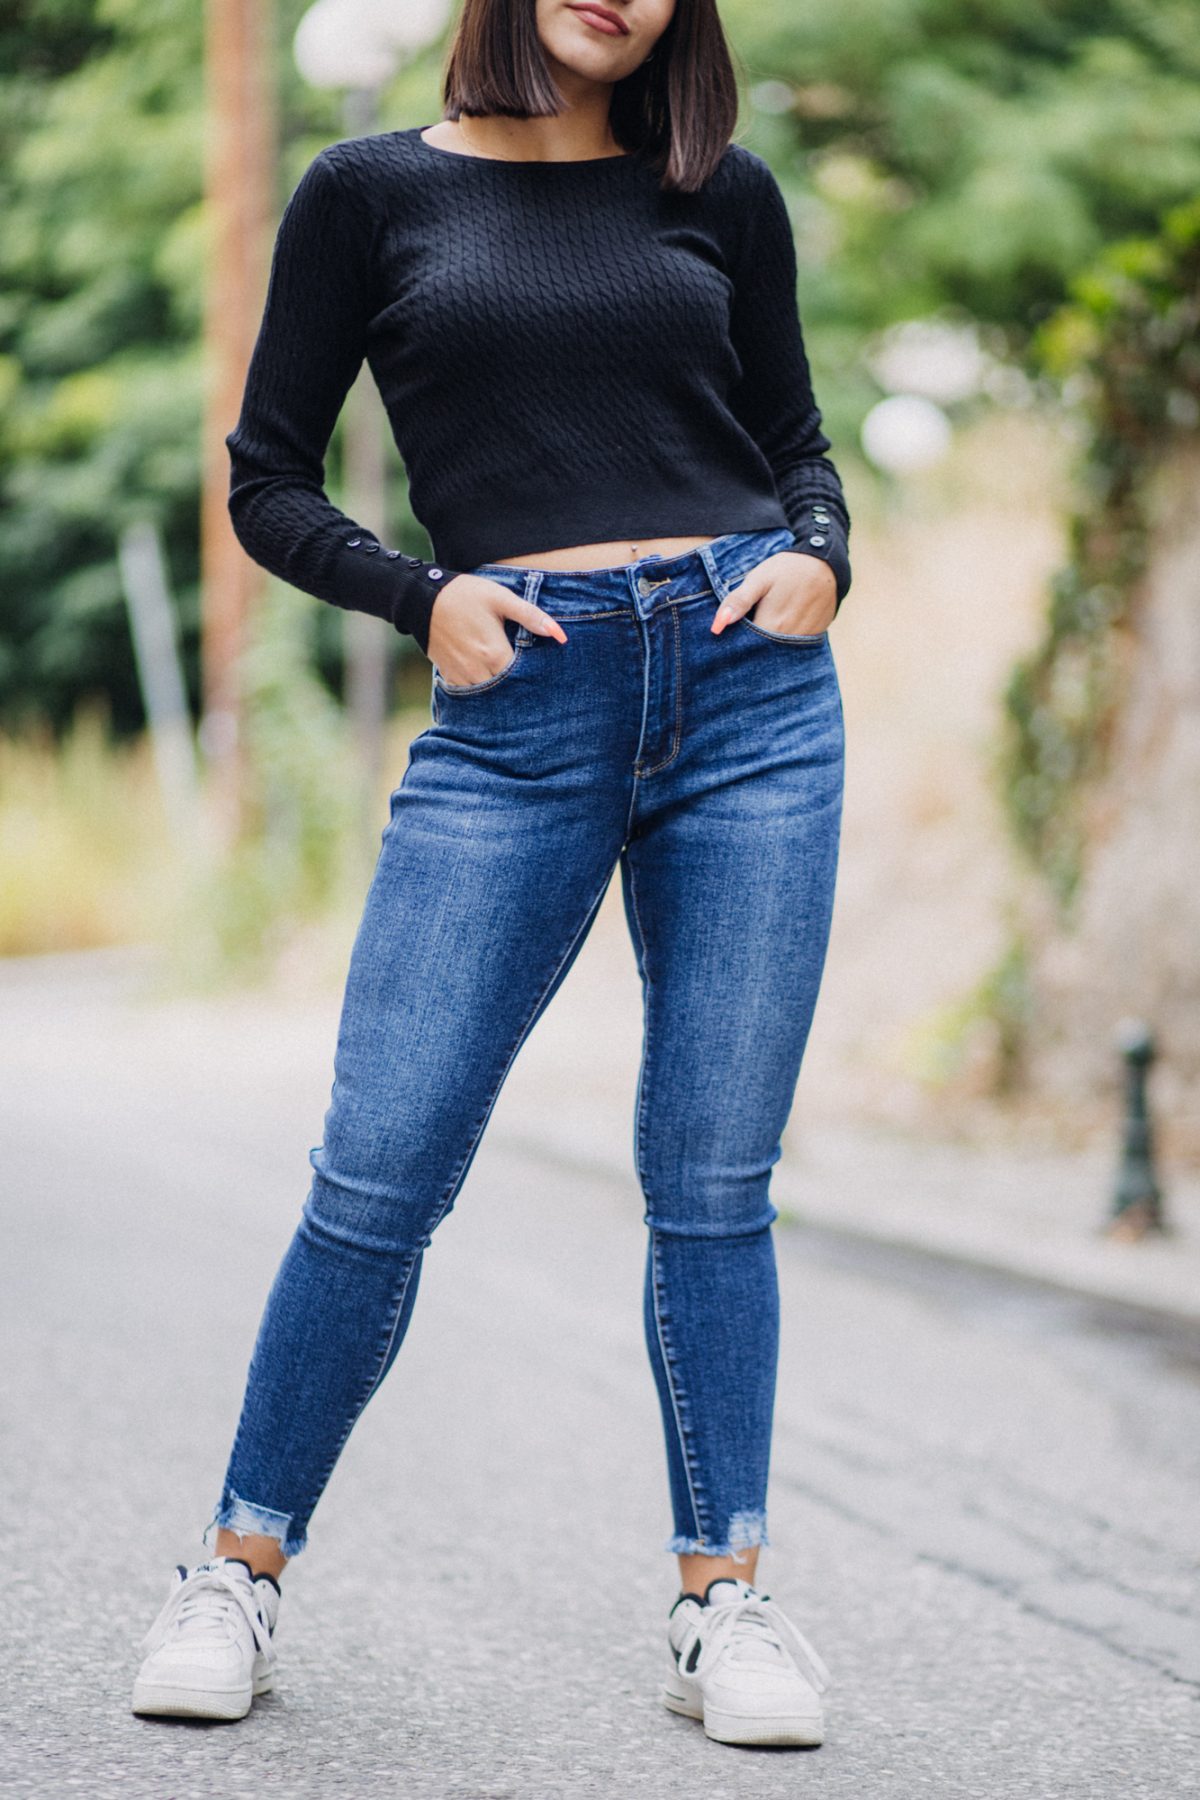 High-waisted skinny jean